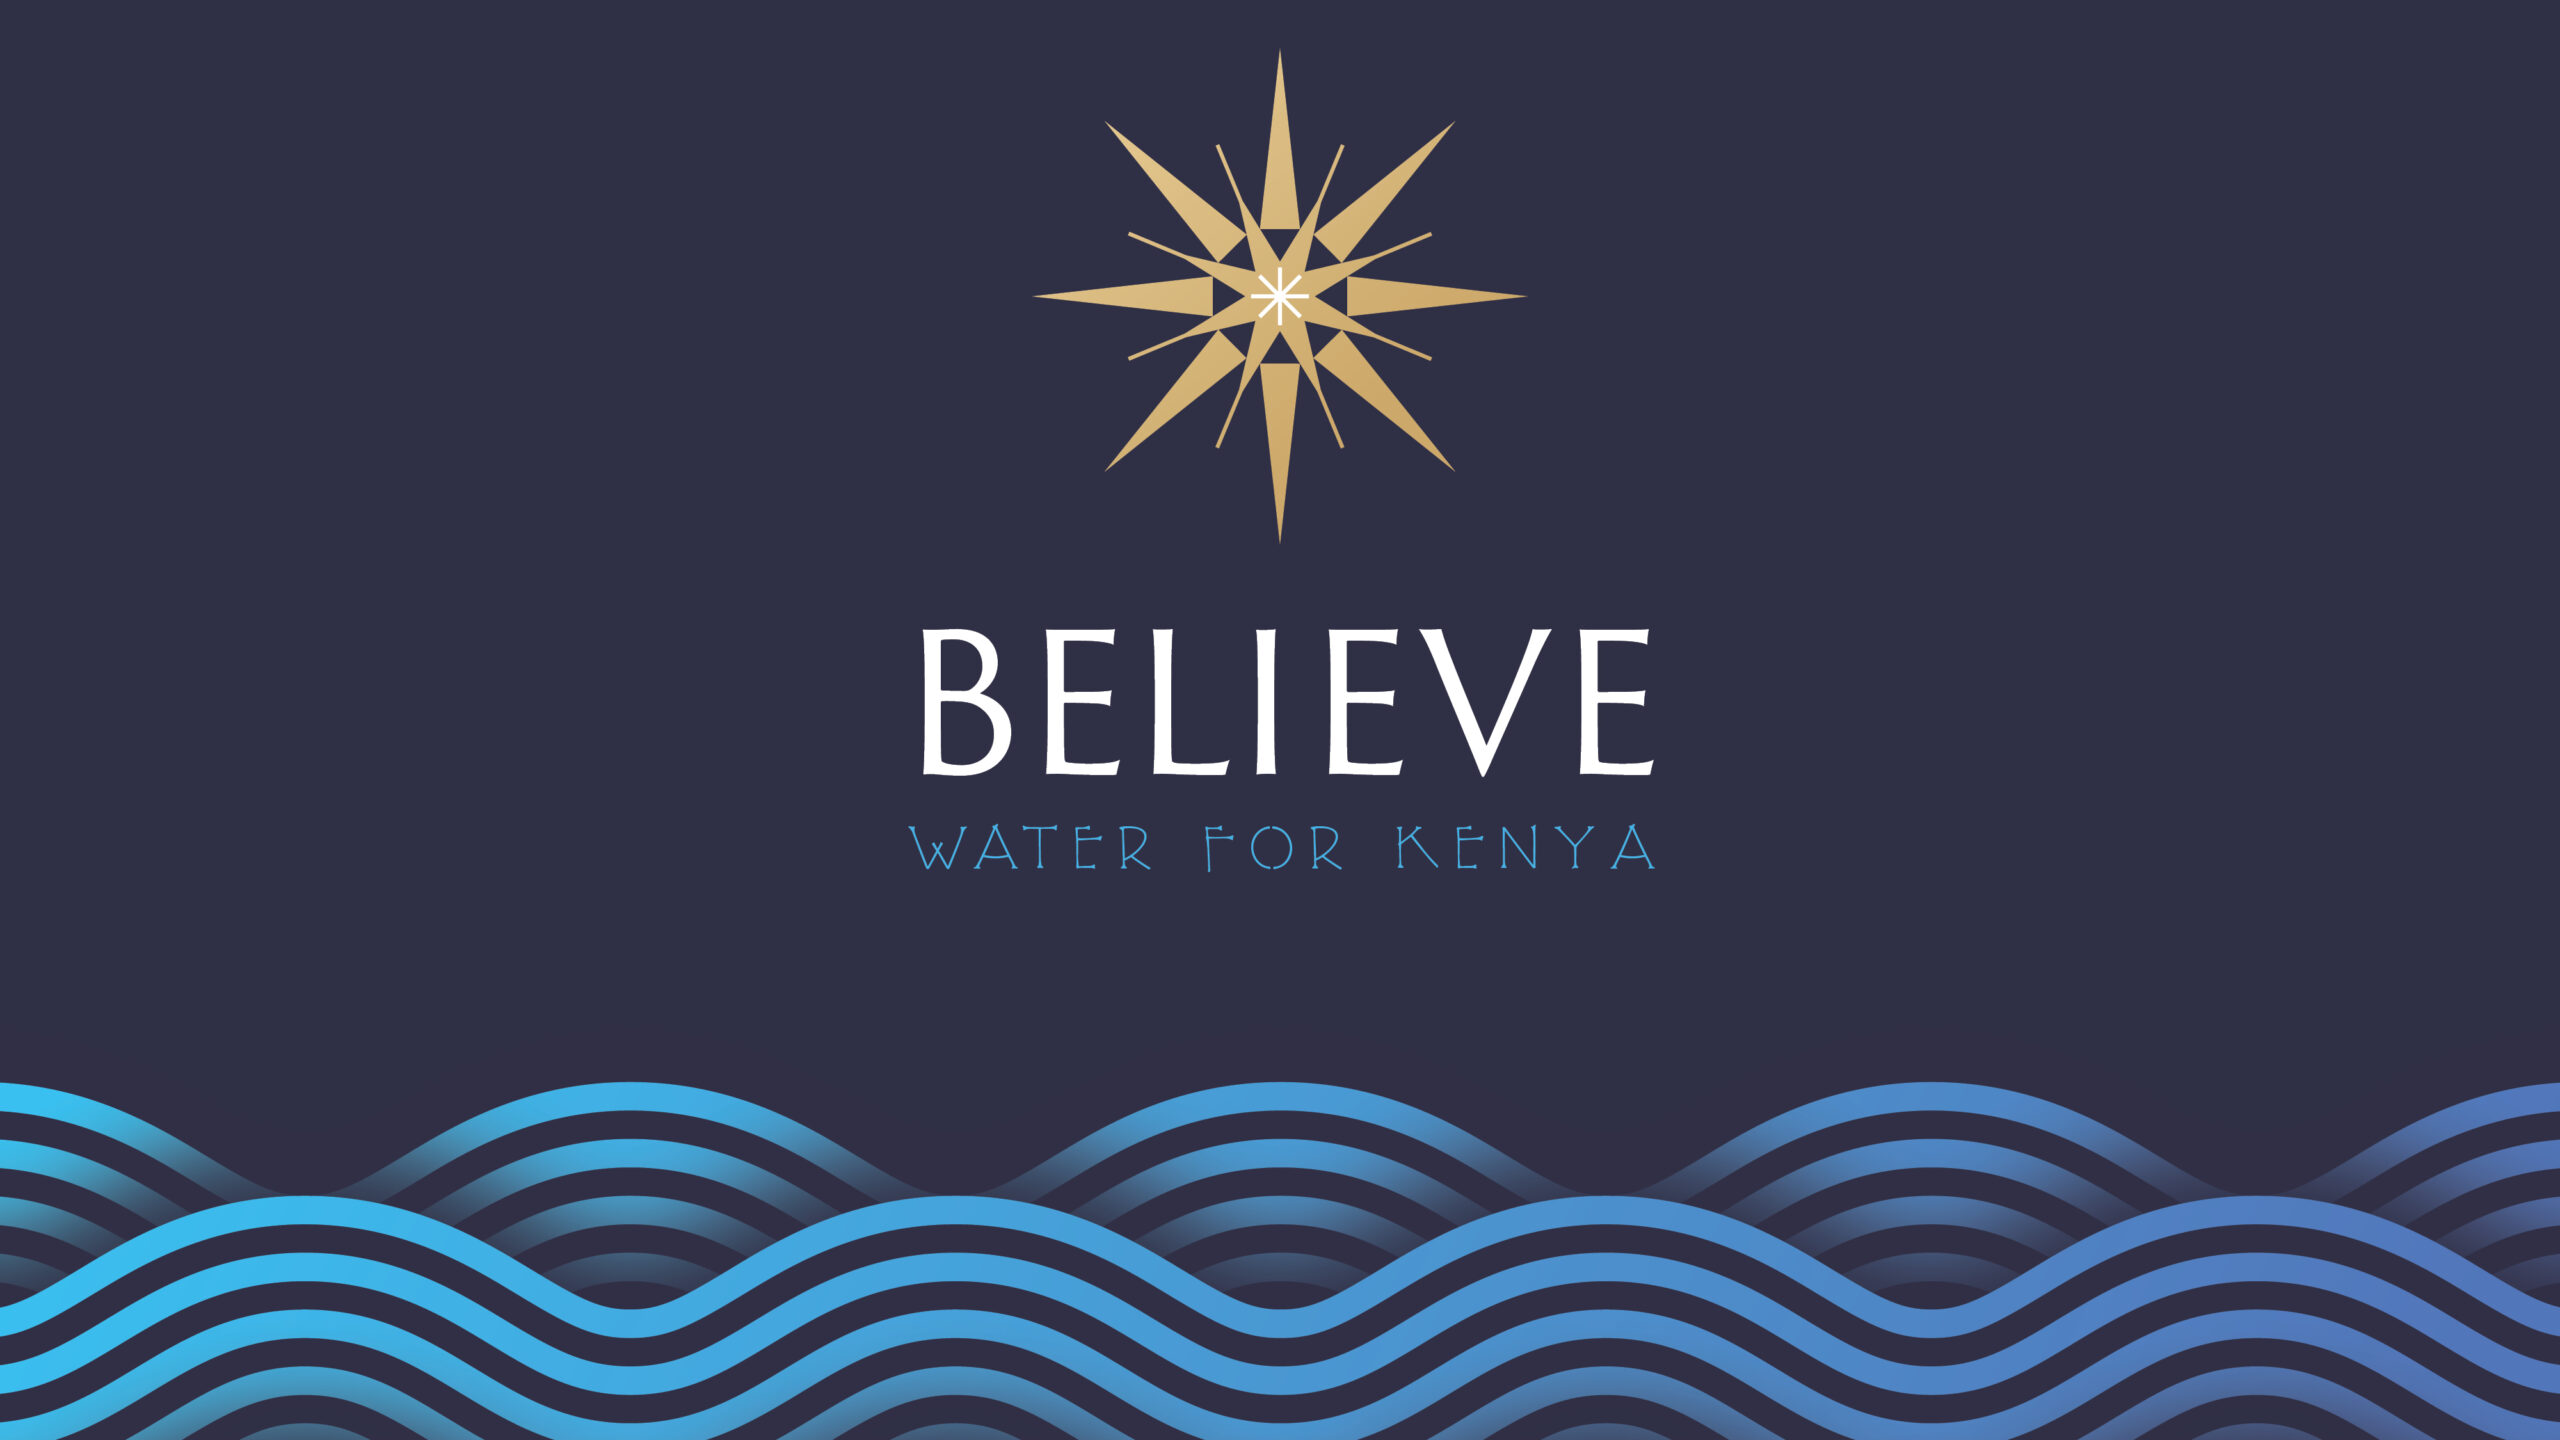 Water for Kenya - PRUMC's Clean Water Initiative since 2015.